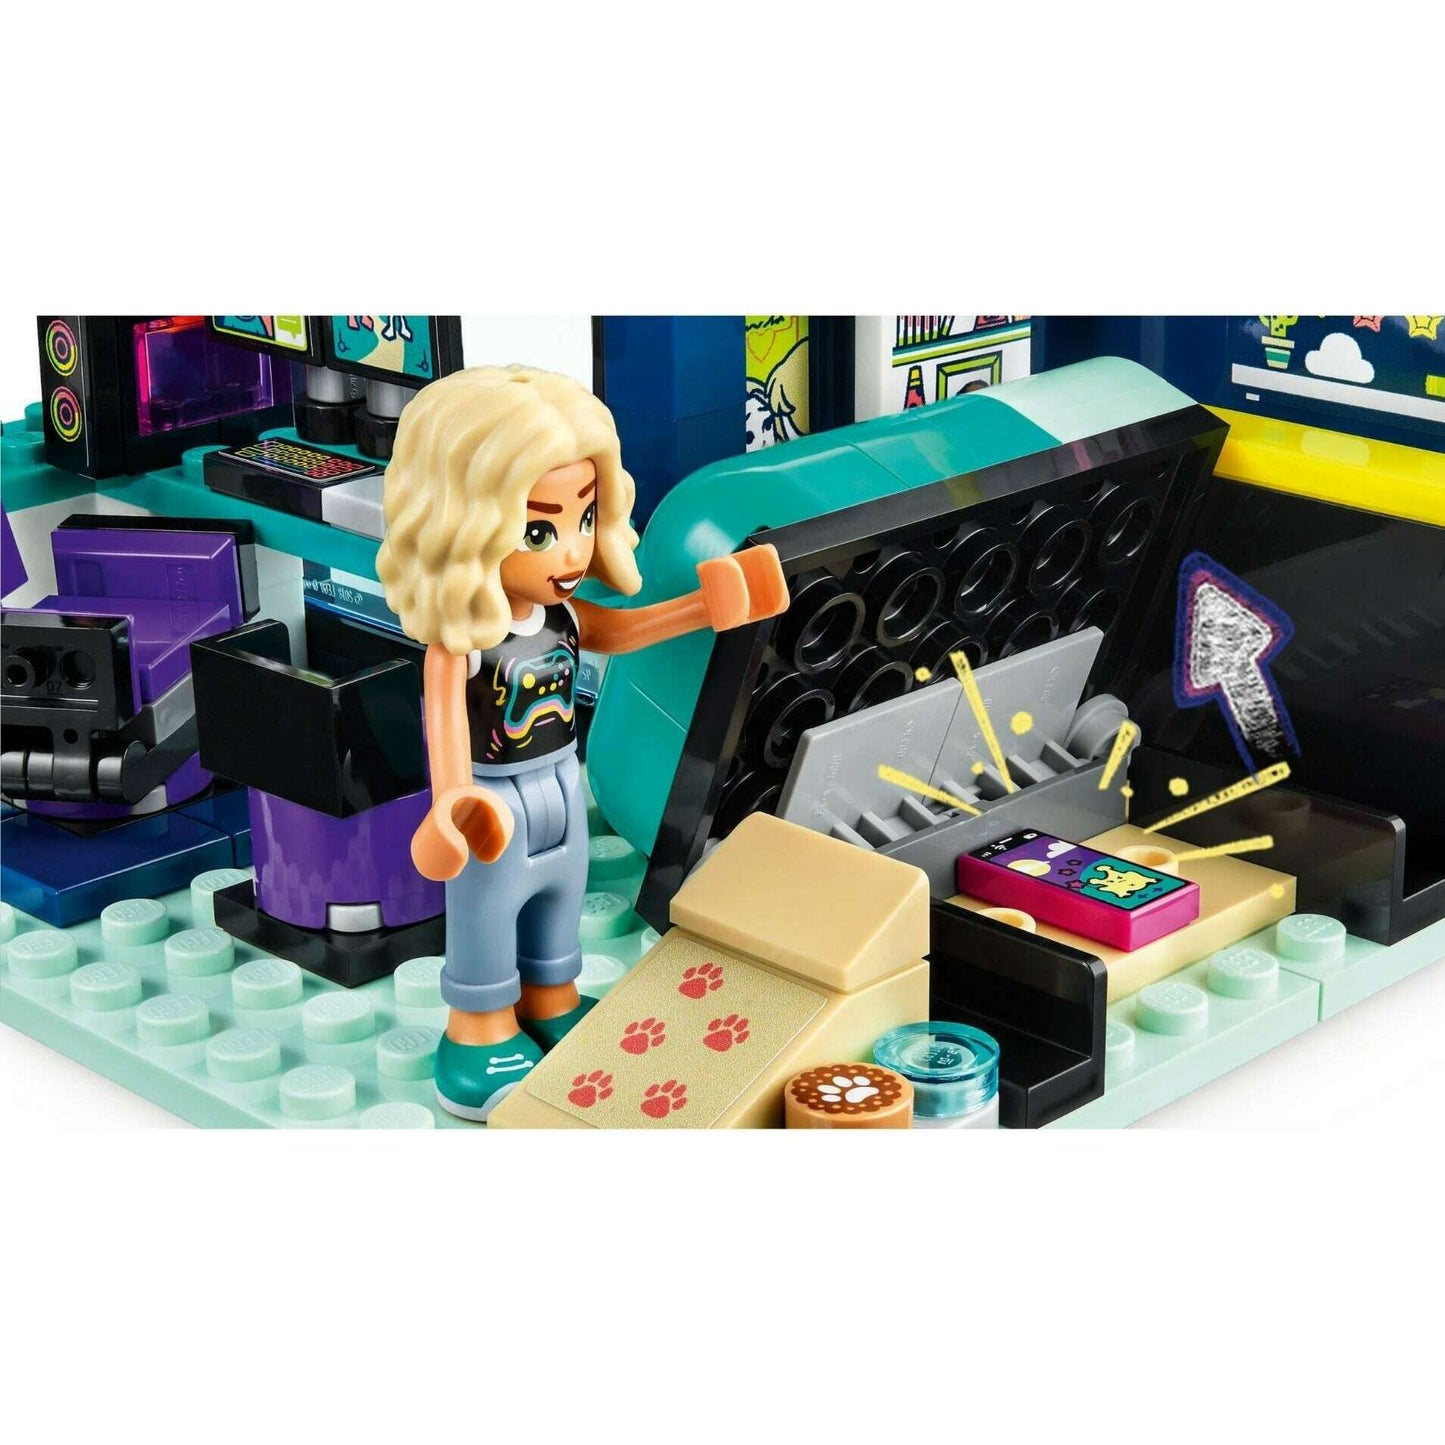 Toys N Tuck:Lego 41755 Friends Nova's Room,Lego Friends